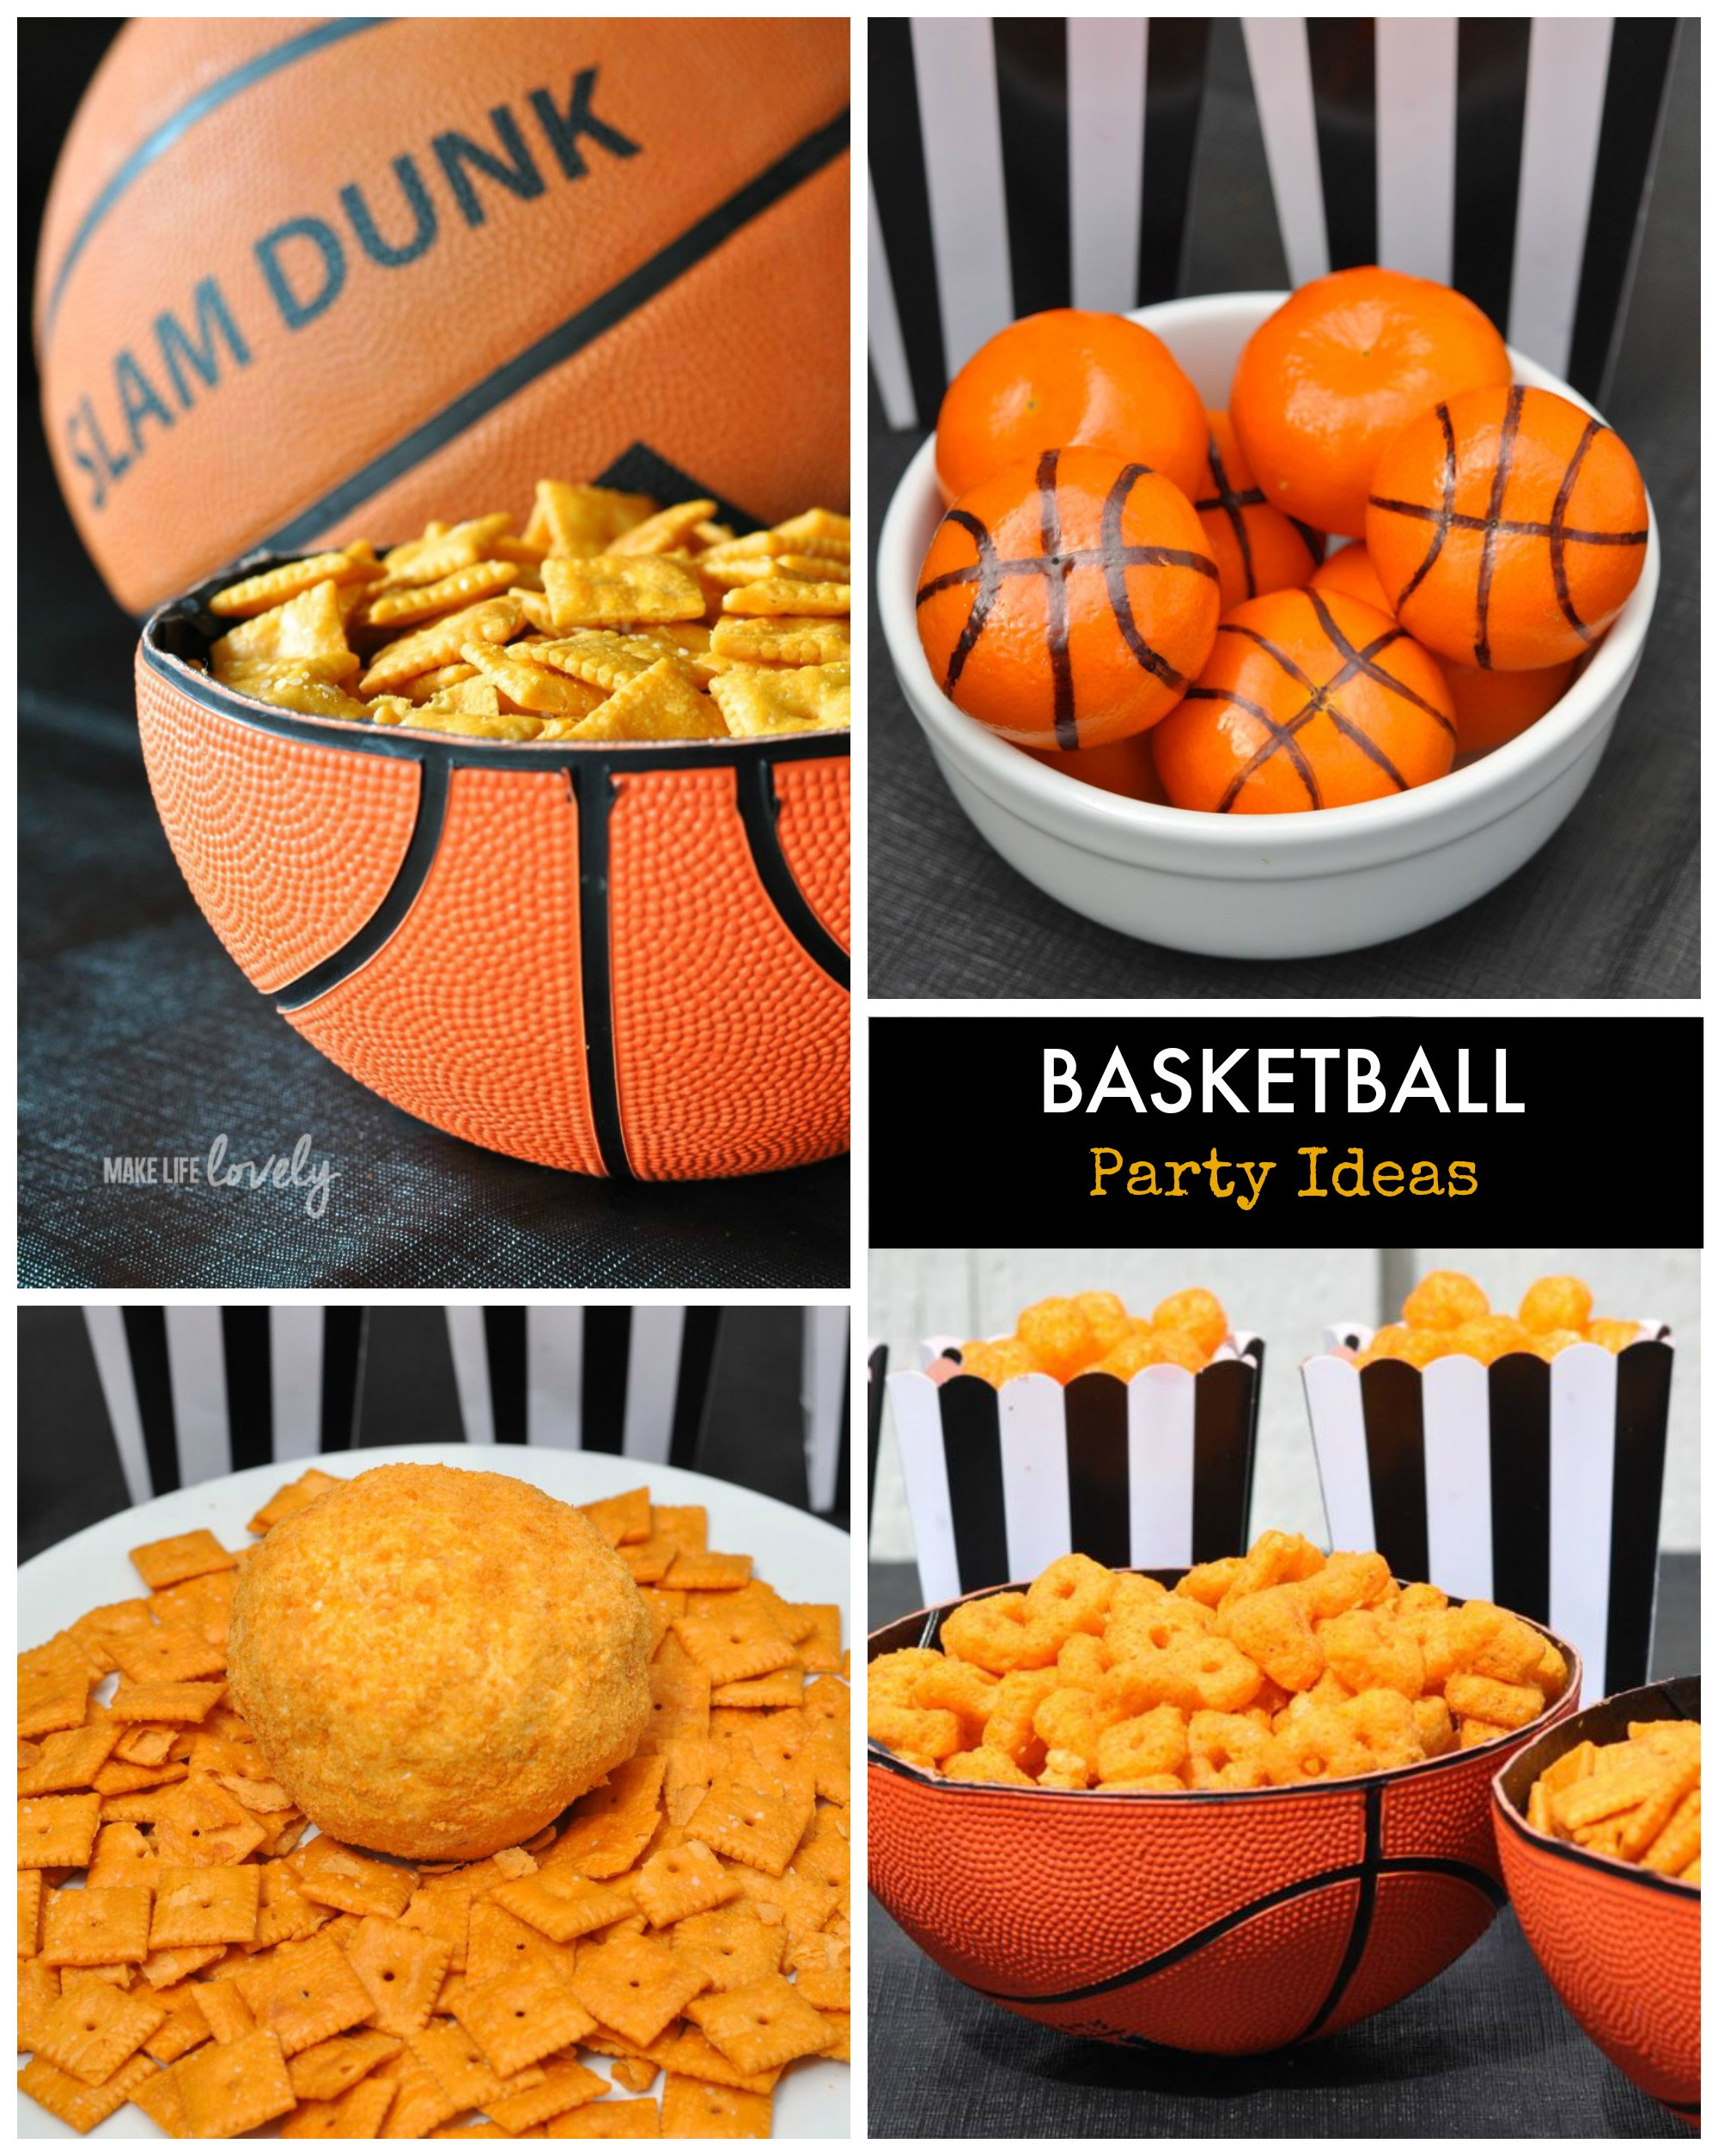 Basketball Party Food Ideas
 Creative Basketball Party Ideas Make Life Lovely